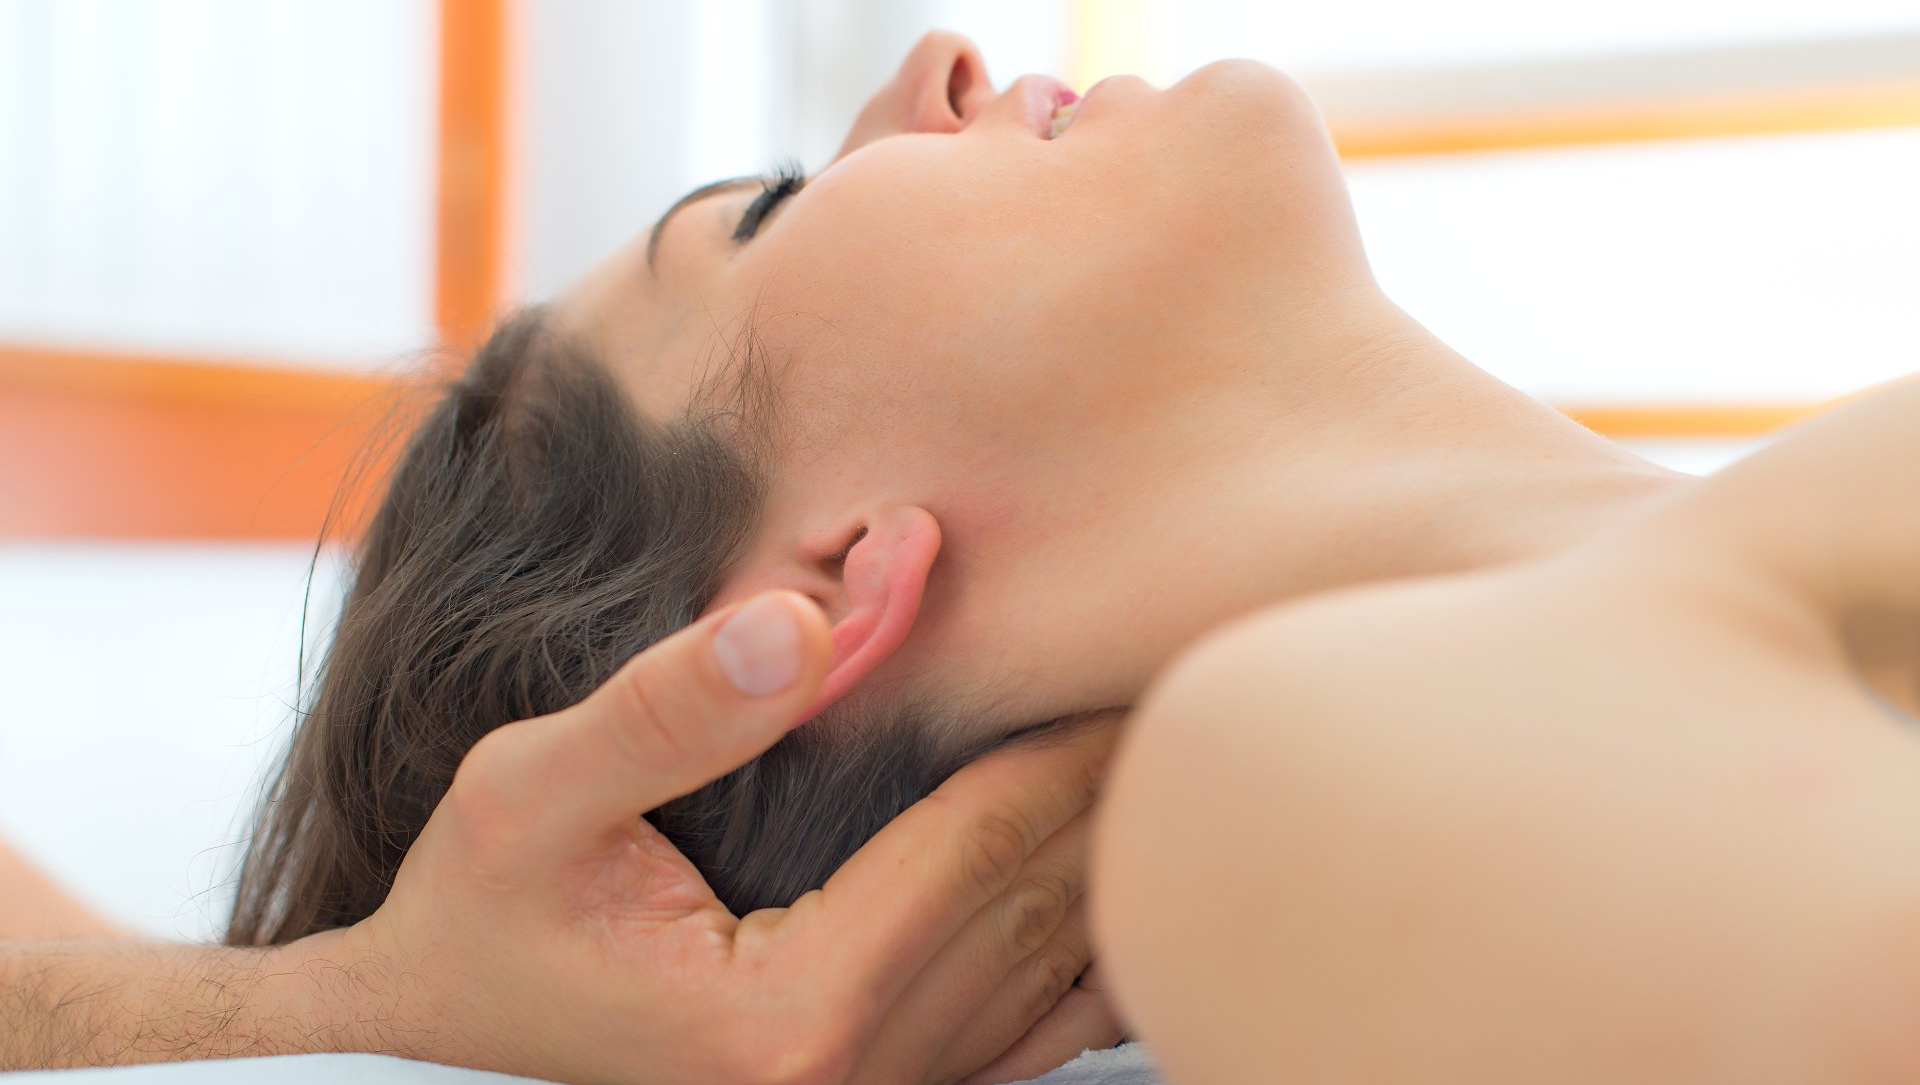 A woman getting a neck massage